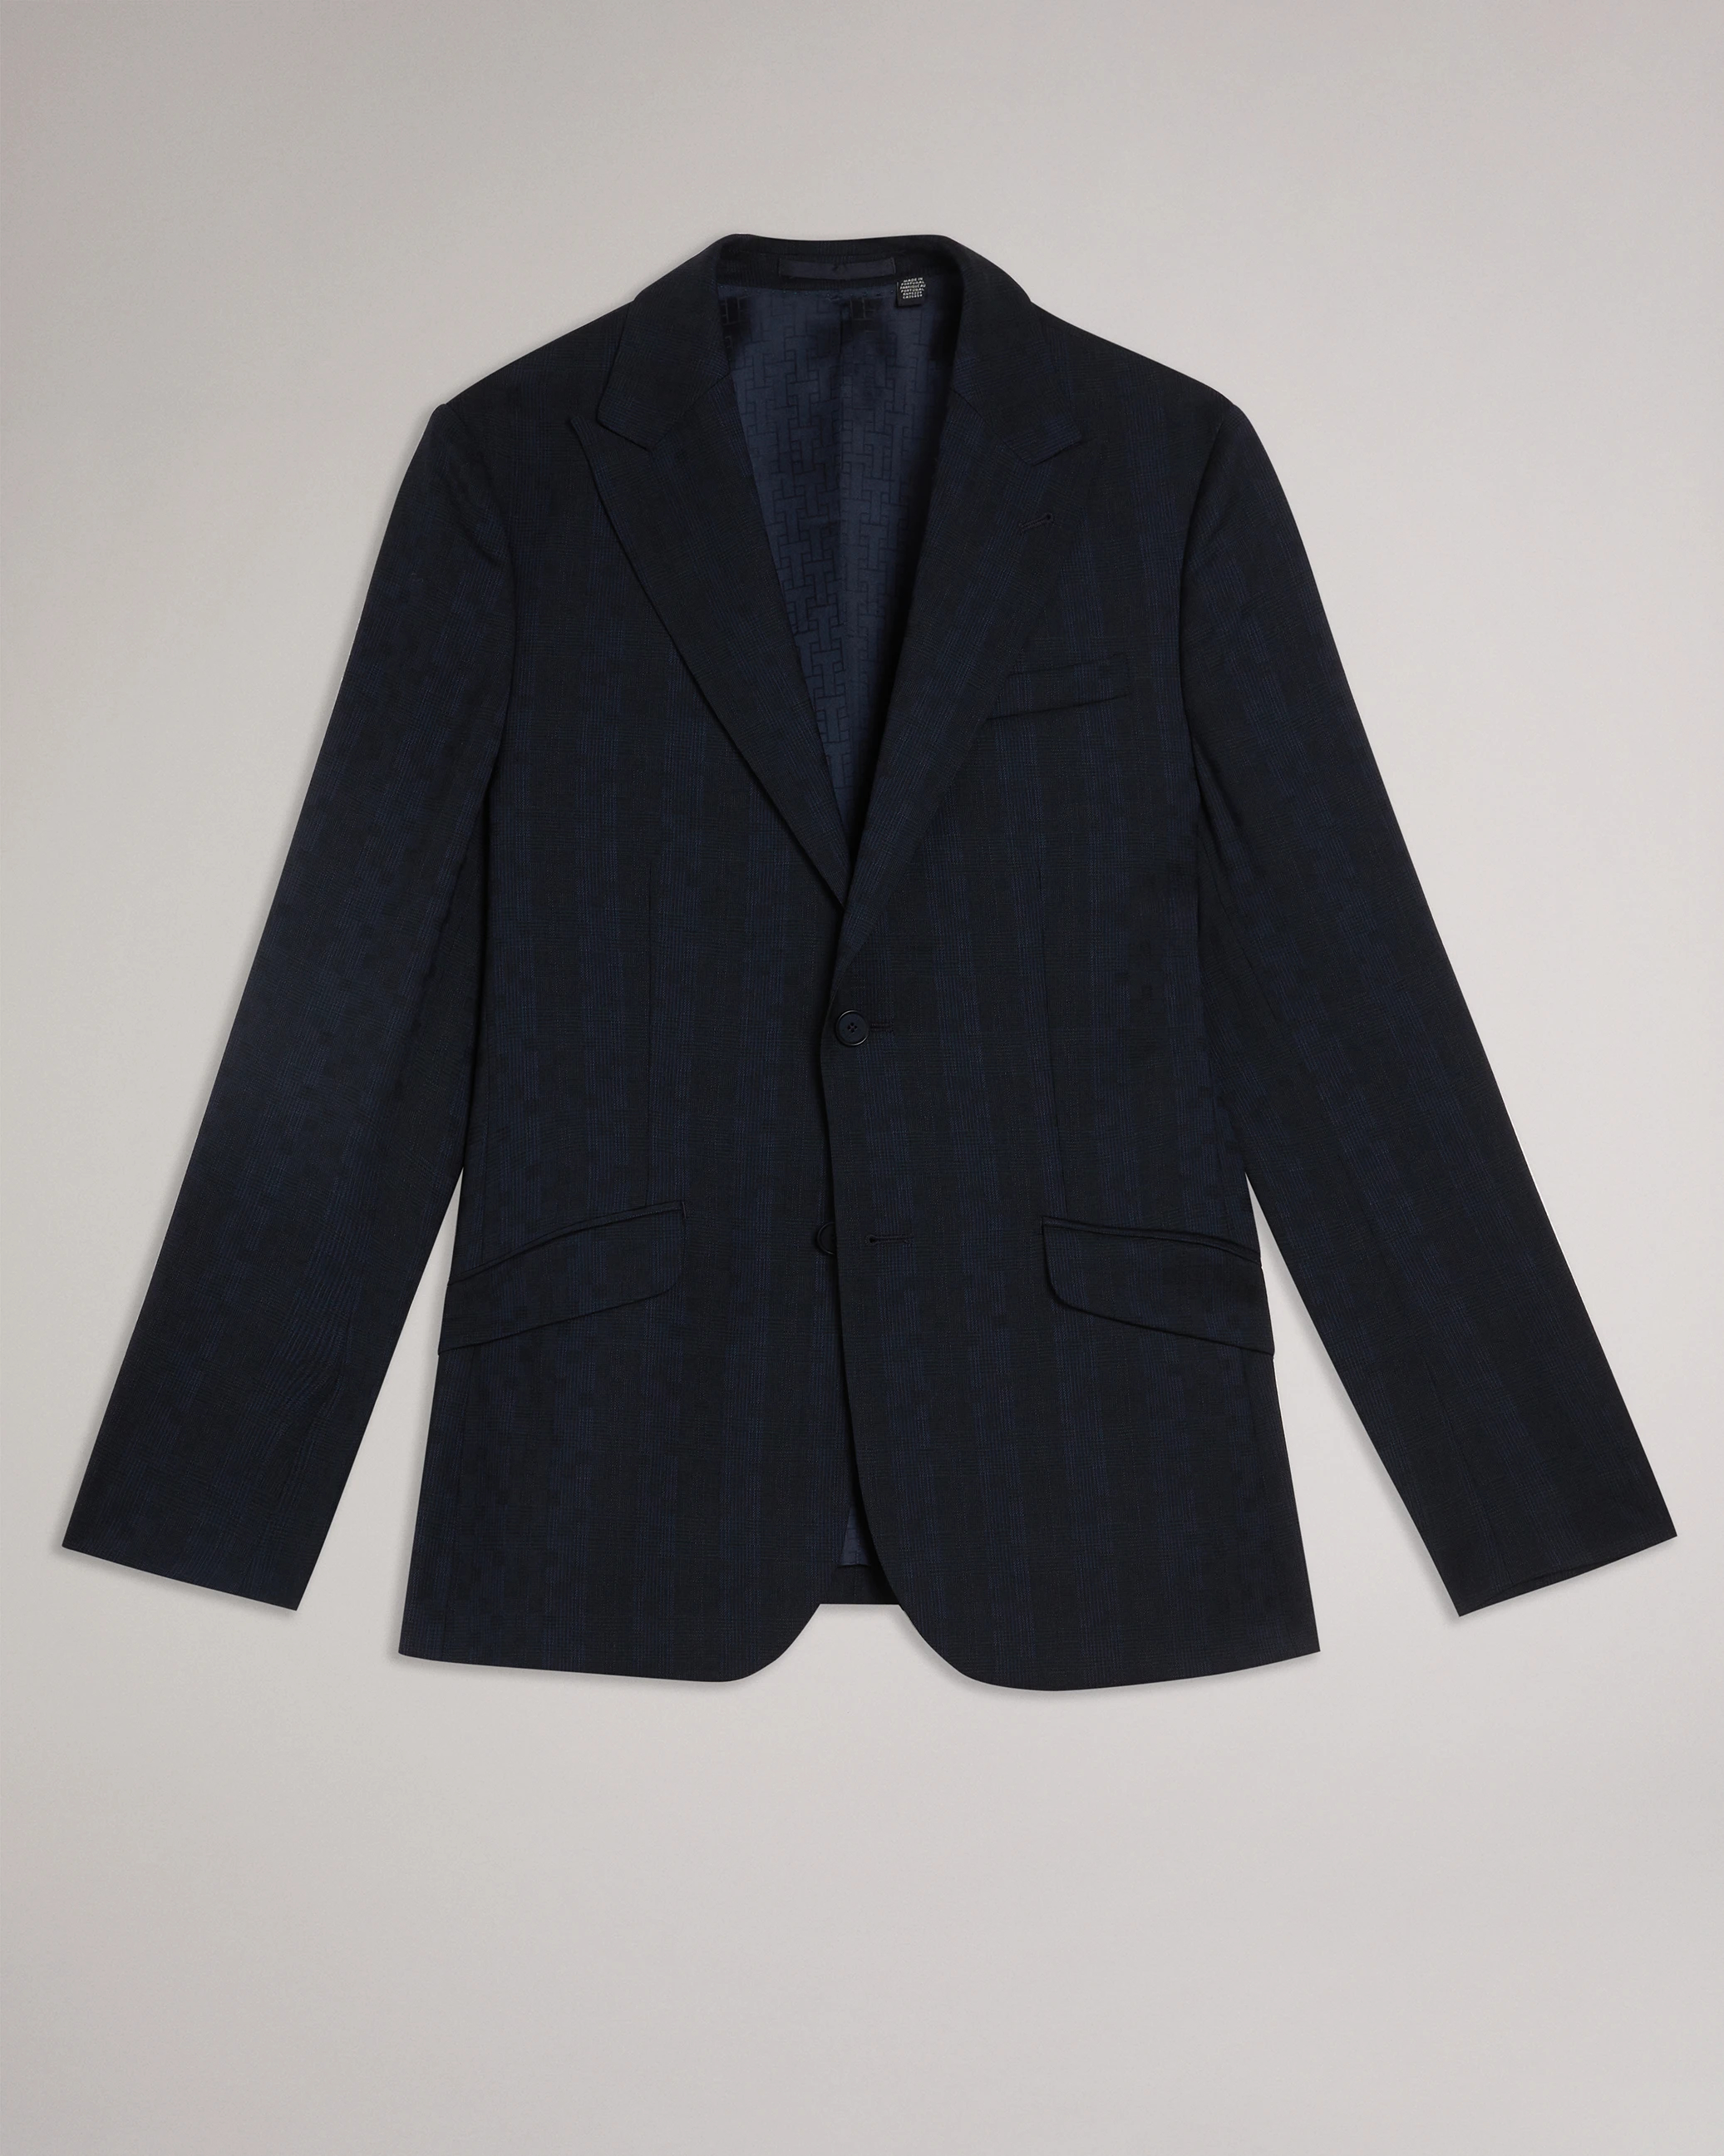 OWENJ ウール トナルチェック スーツジャケット【セットアップ】